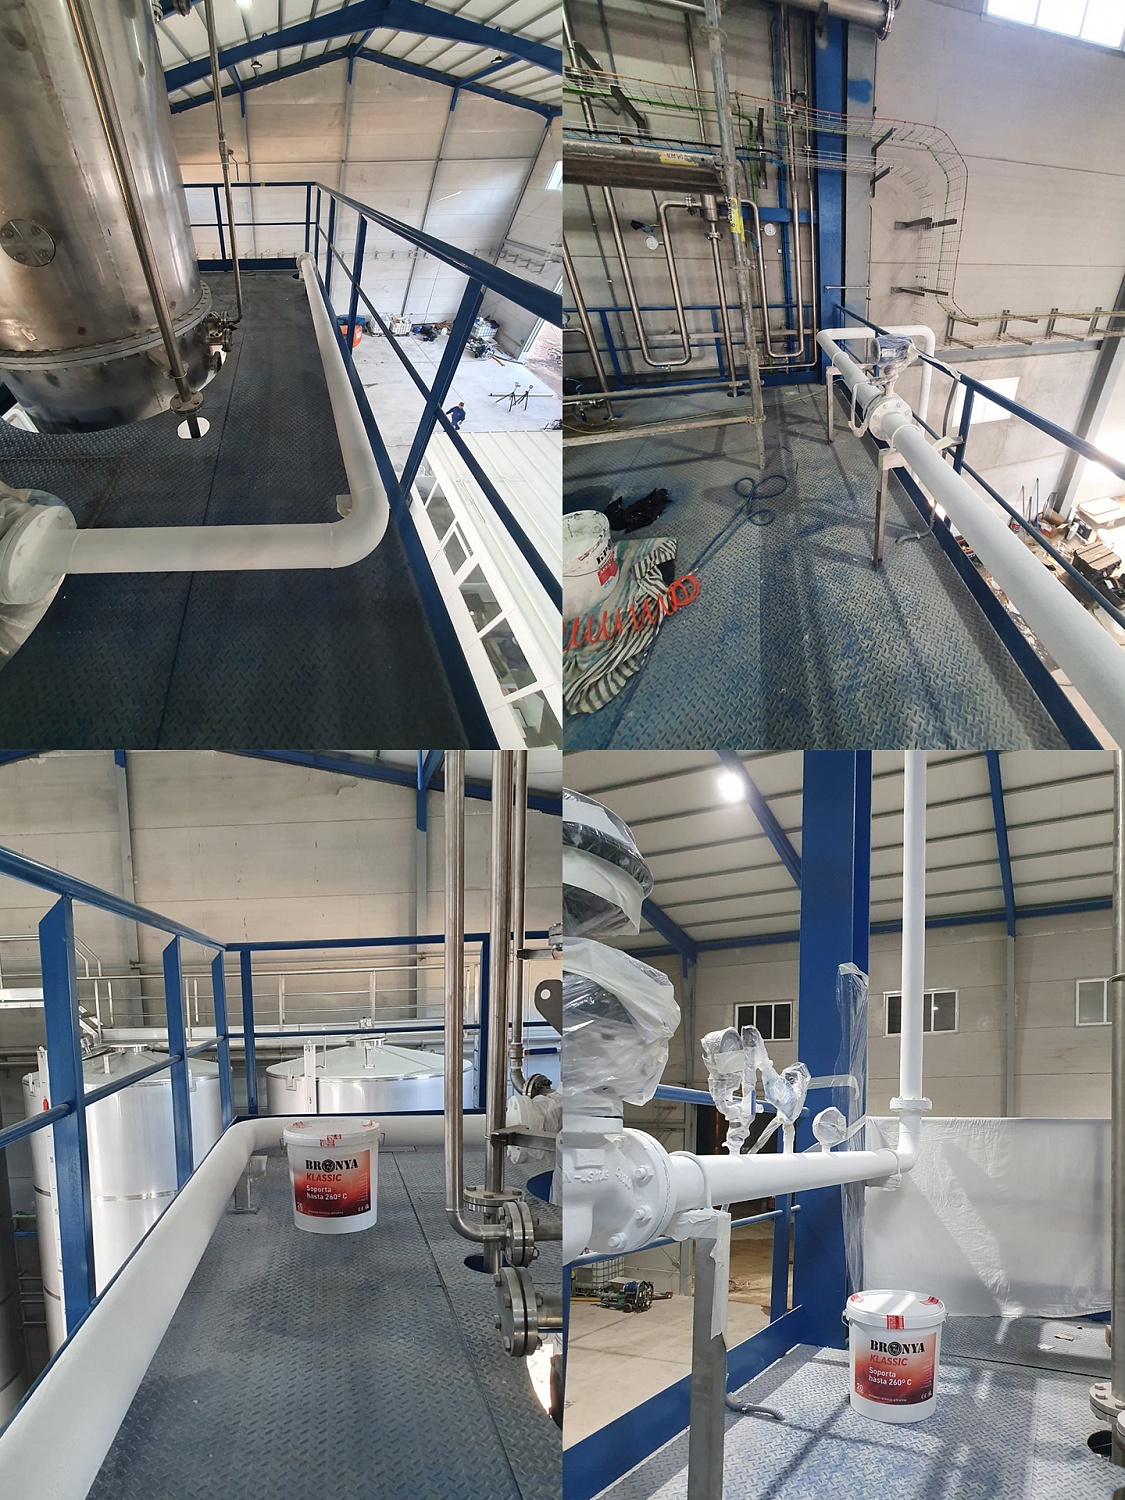 Bronya Classic at the facility "Isabel 2-ya" water utility, Comunidad Madrid, Spain (photo + video)